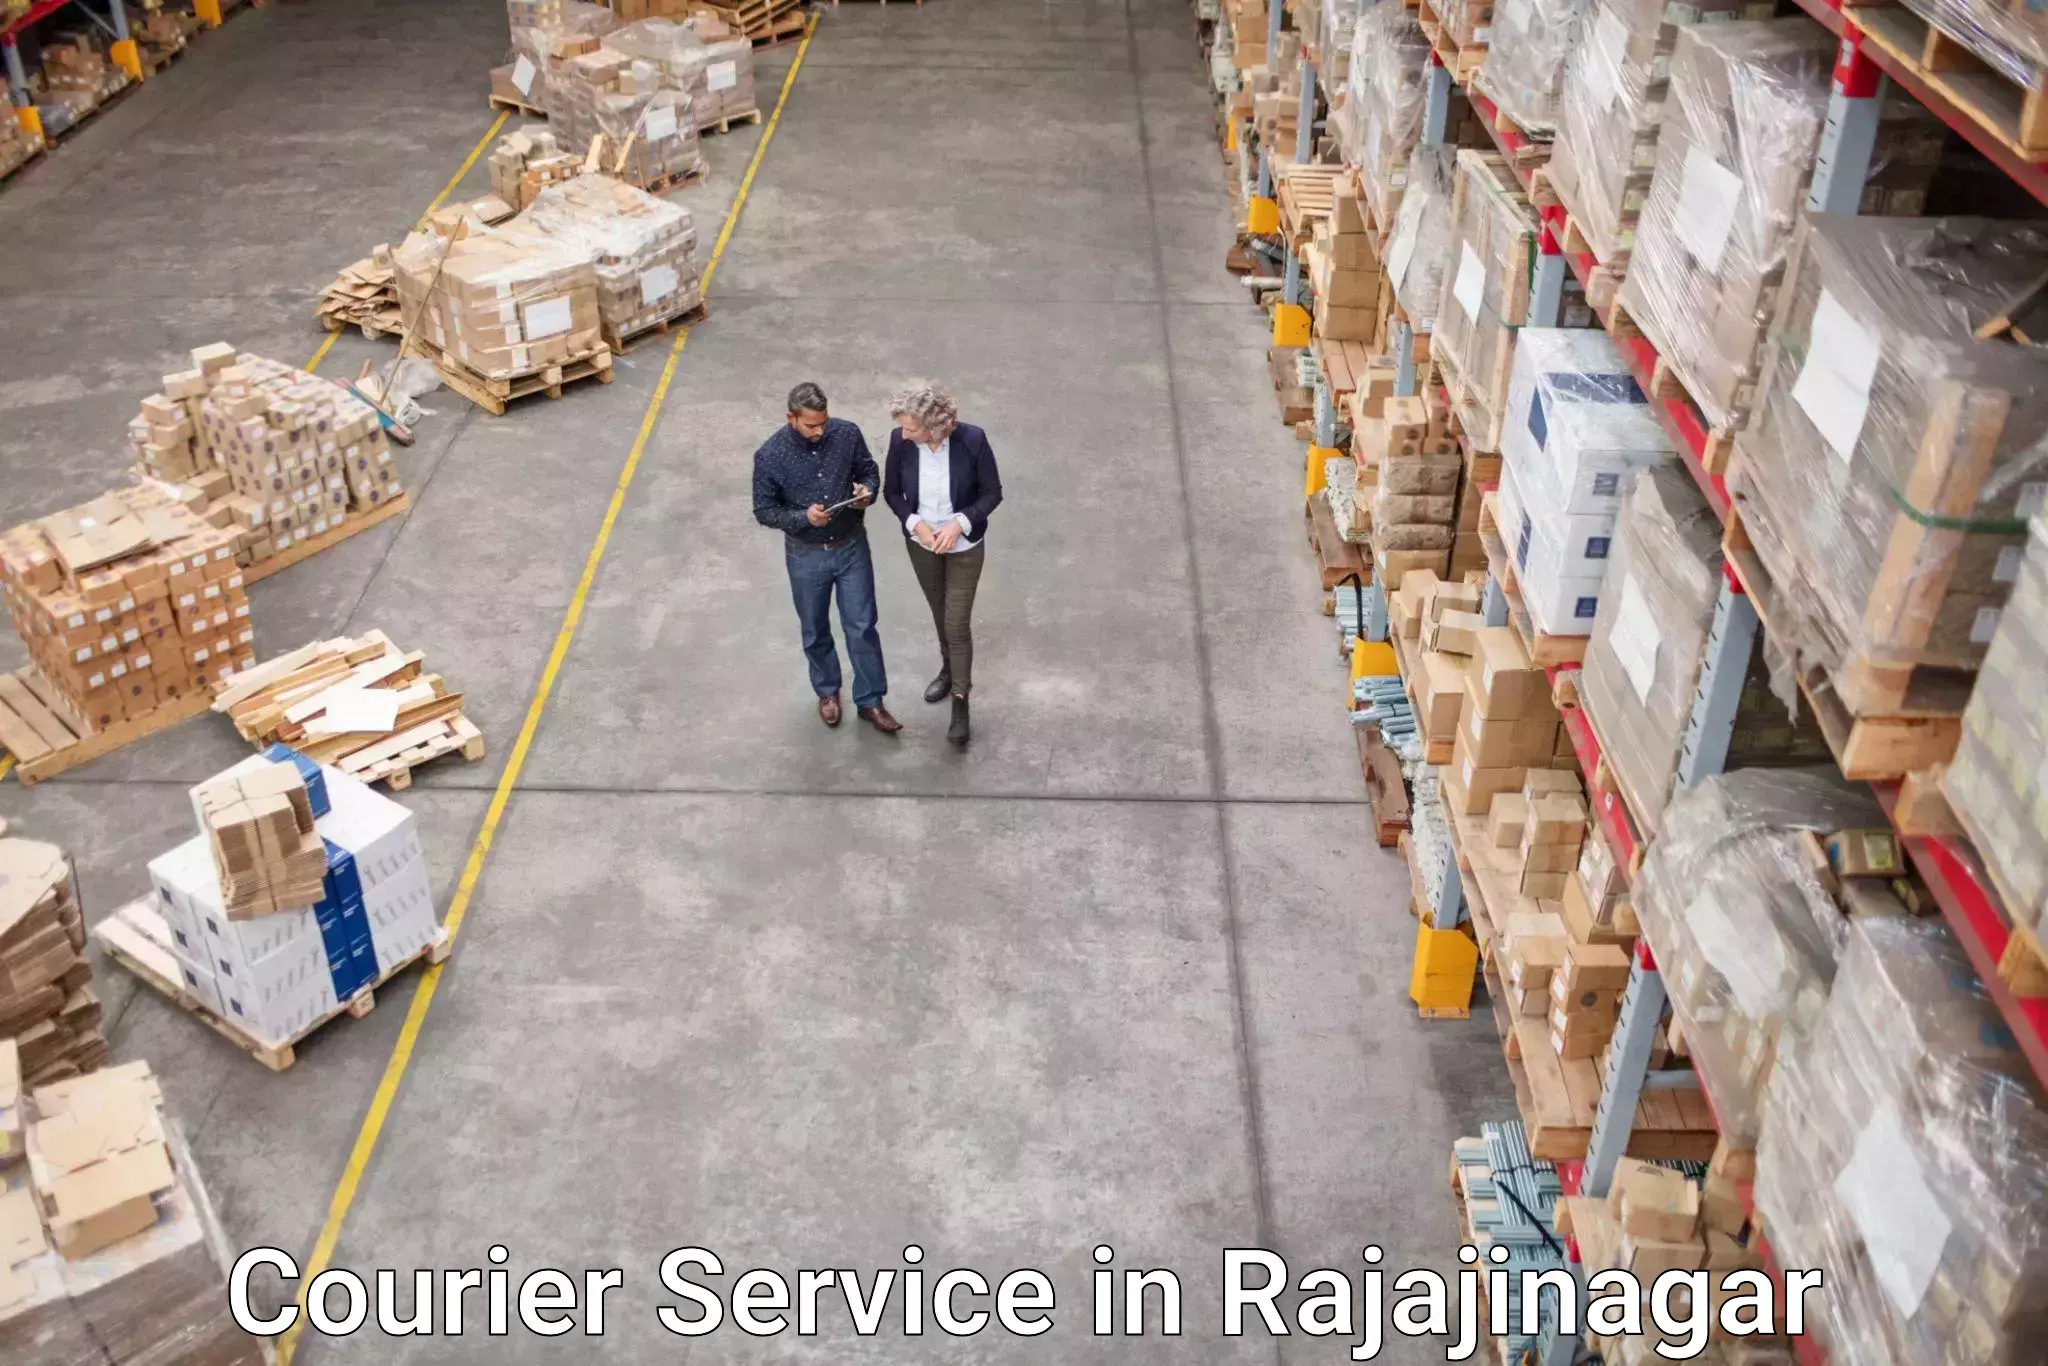 High value parcel delivery in Rajajinagar